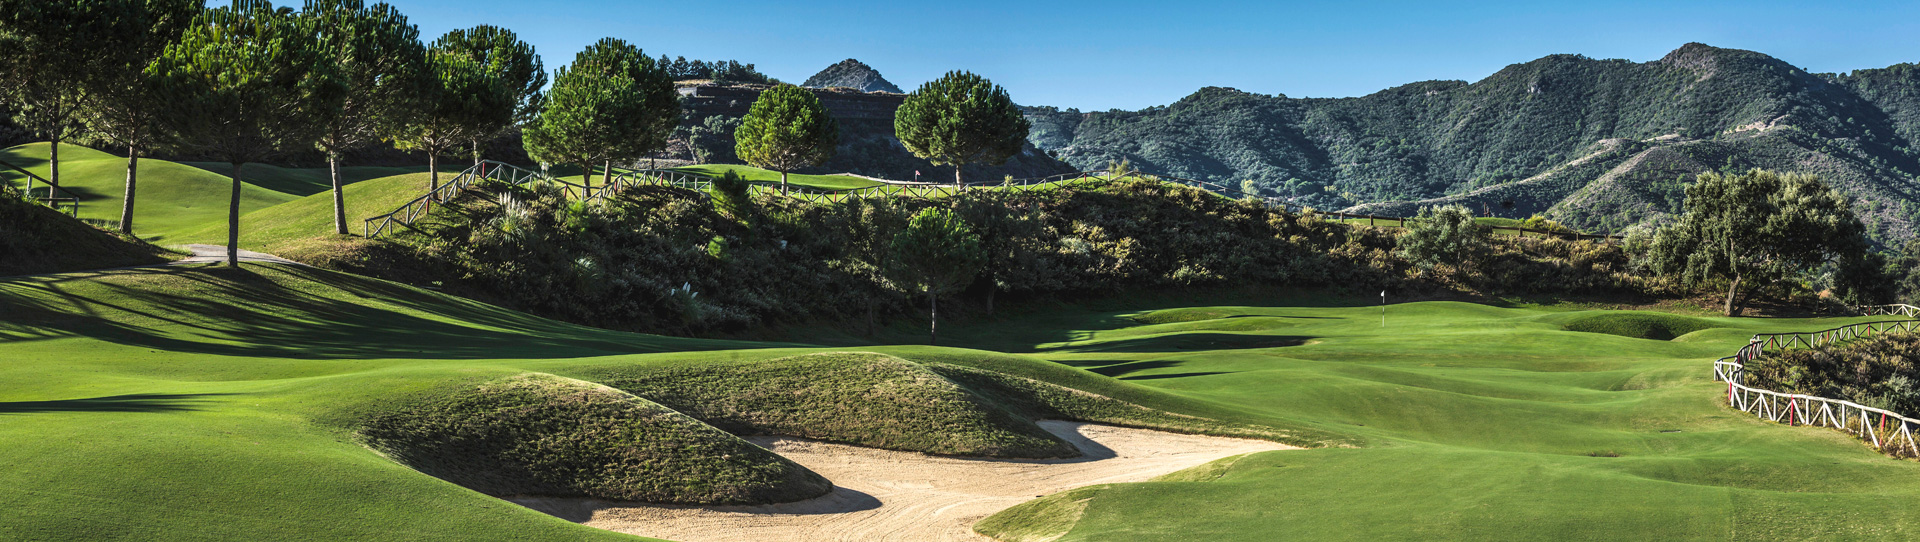 Spain golf courses - La Zagaleta New Course - Photo 1